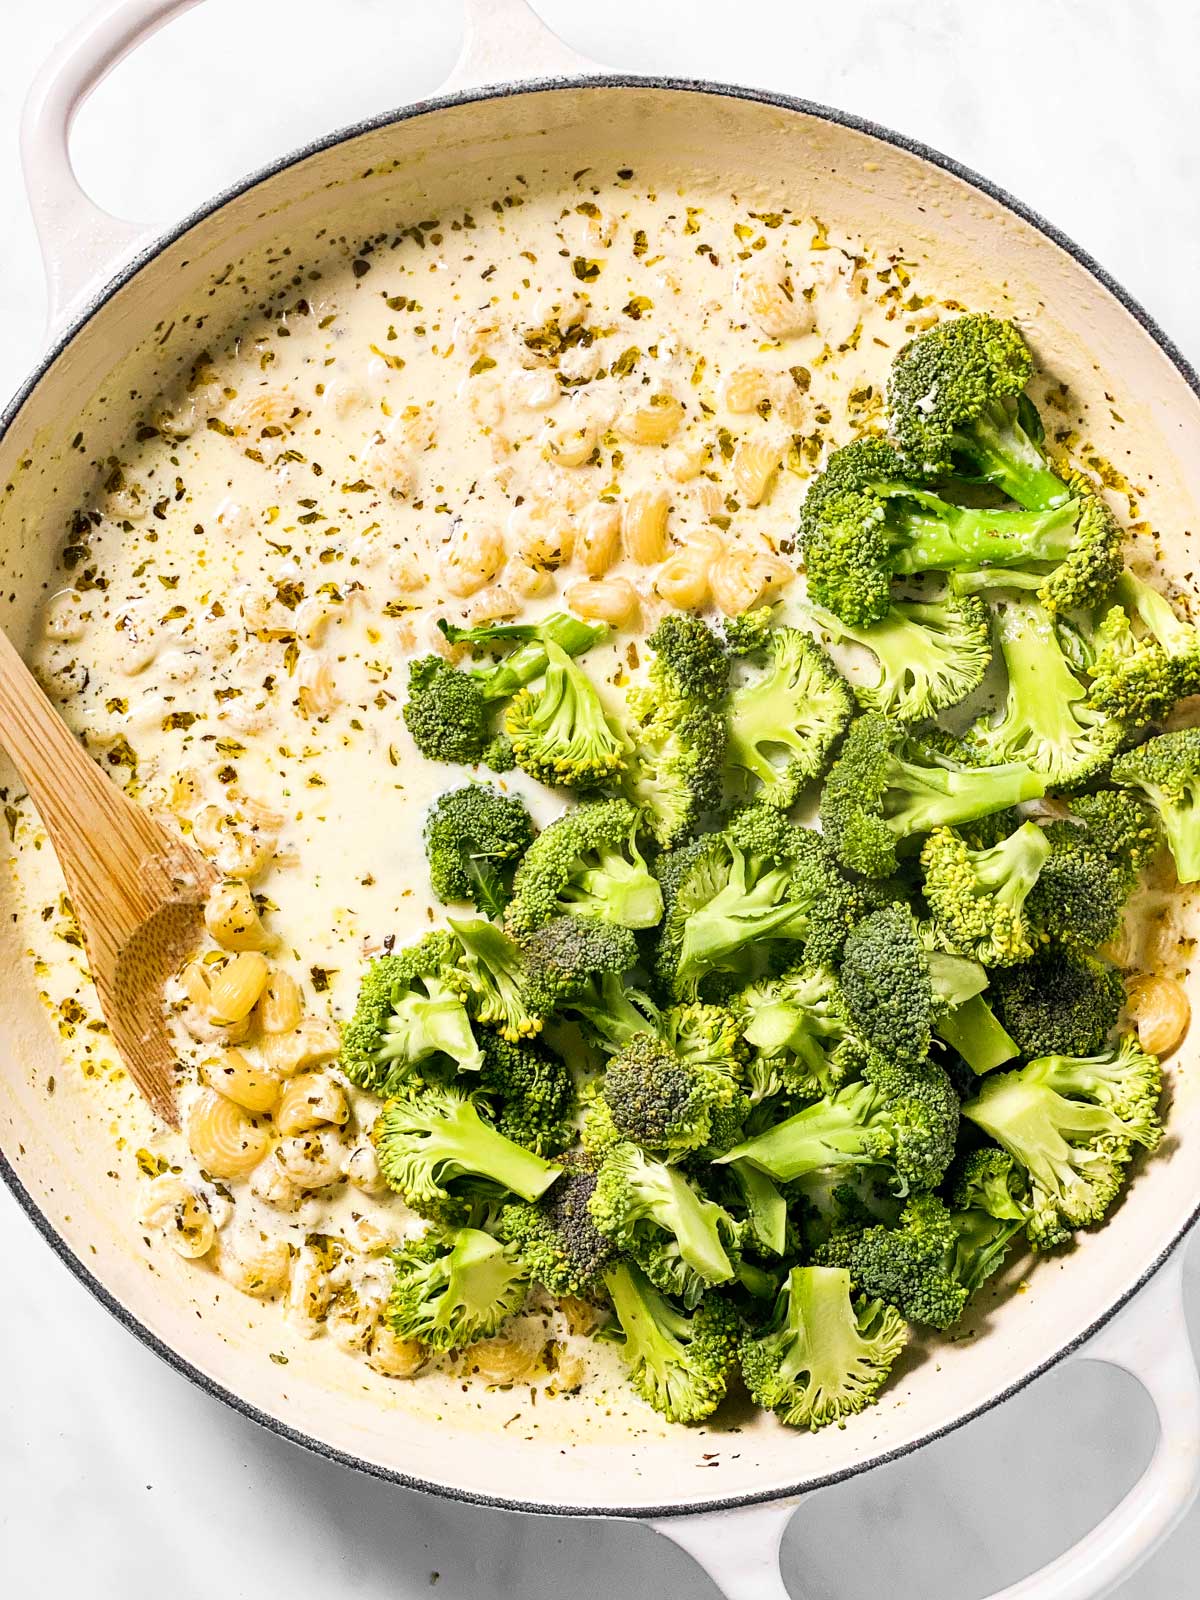 raw broccoli in white skillet with creamy pasta